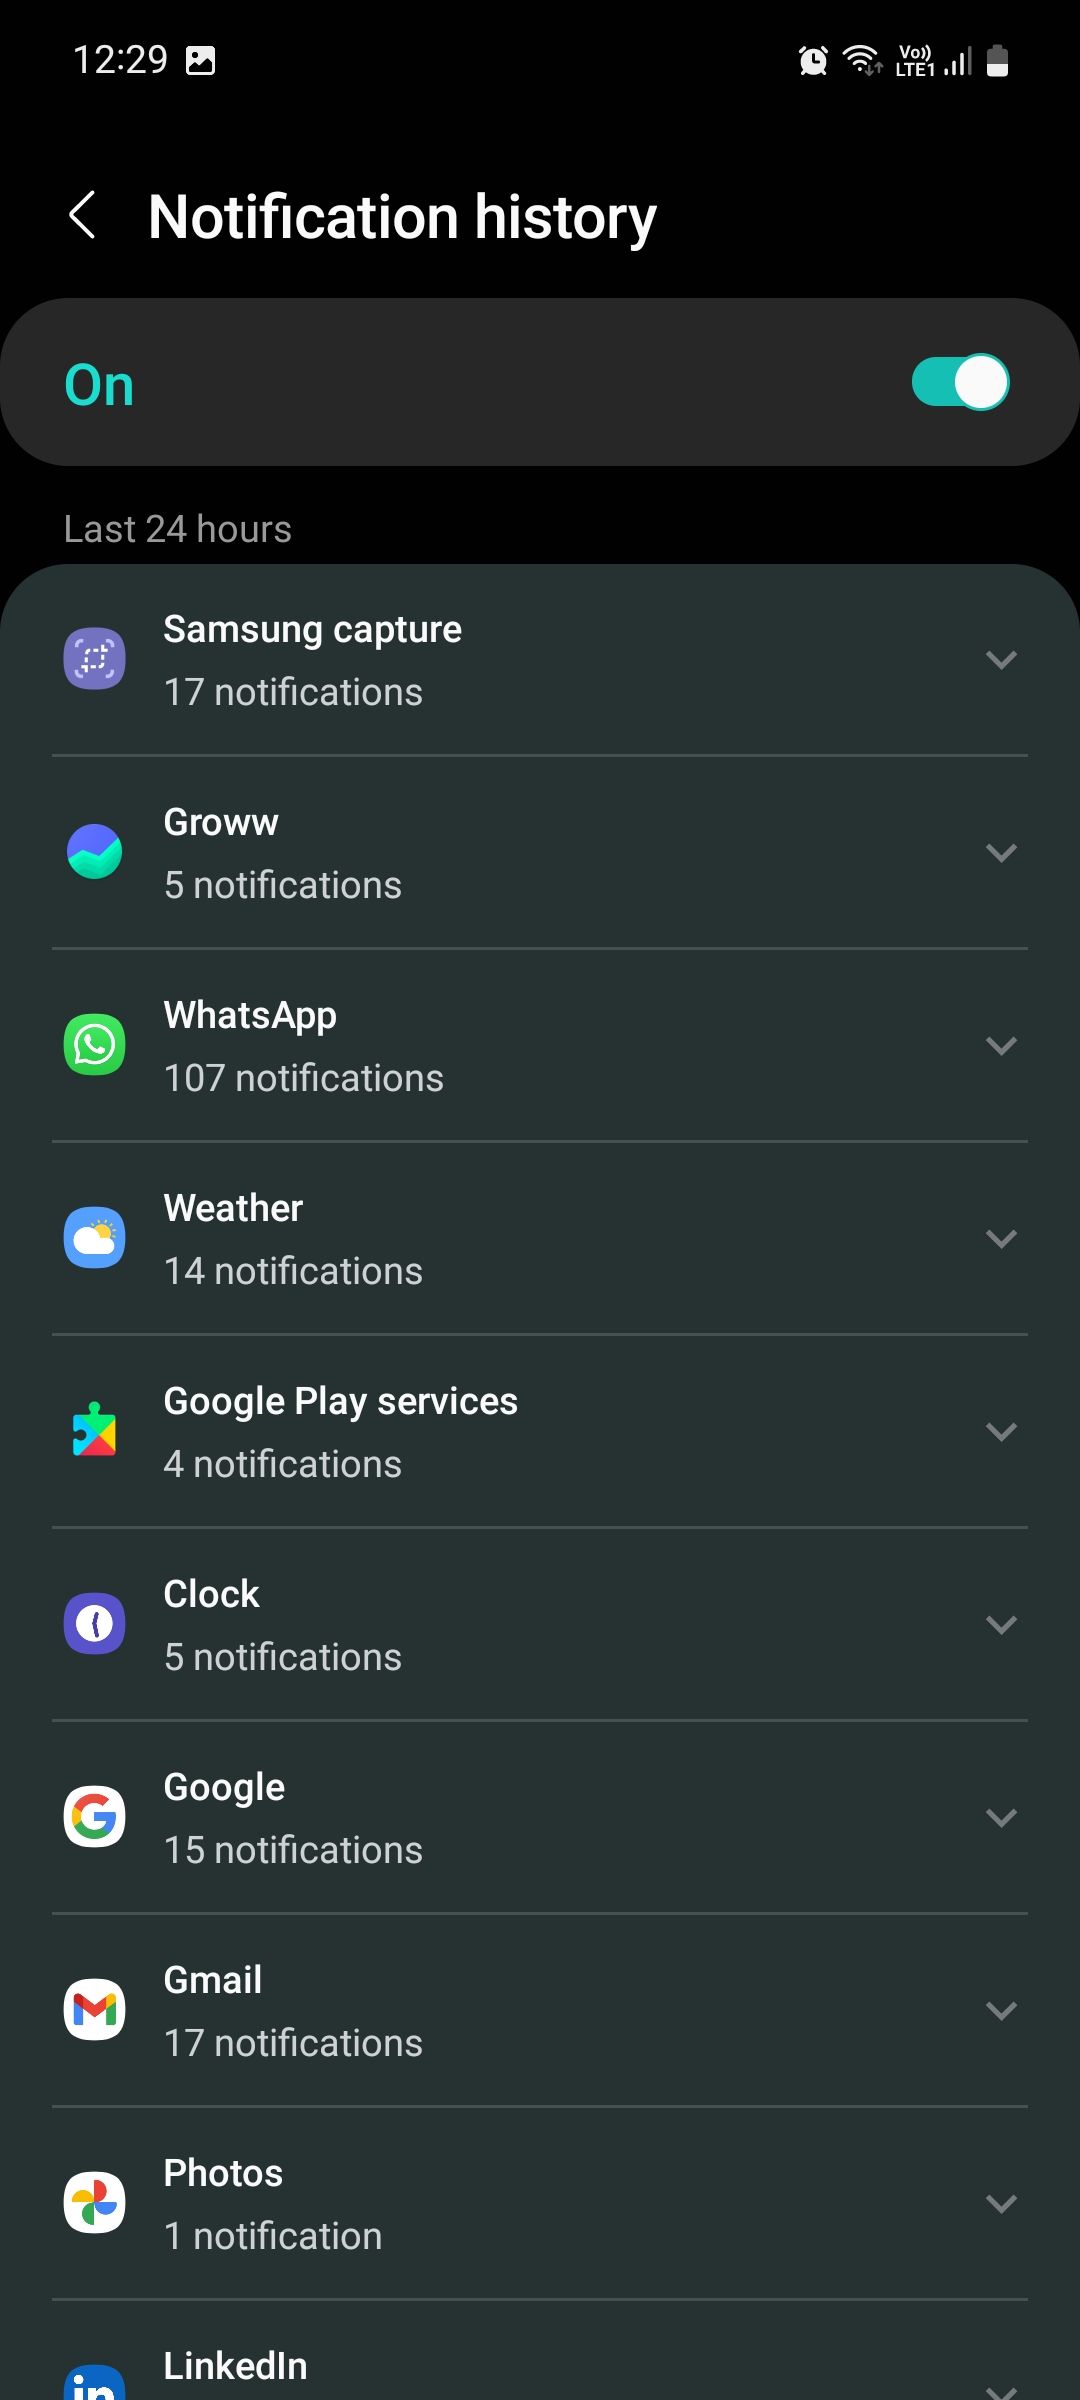 Samsung notification history